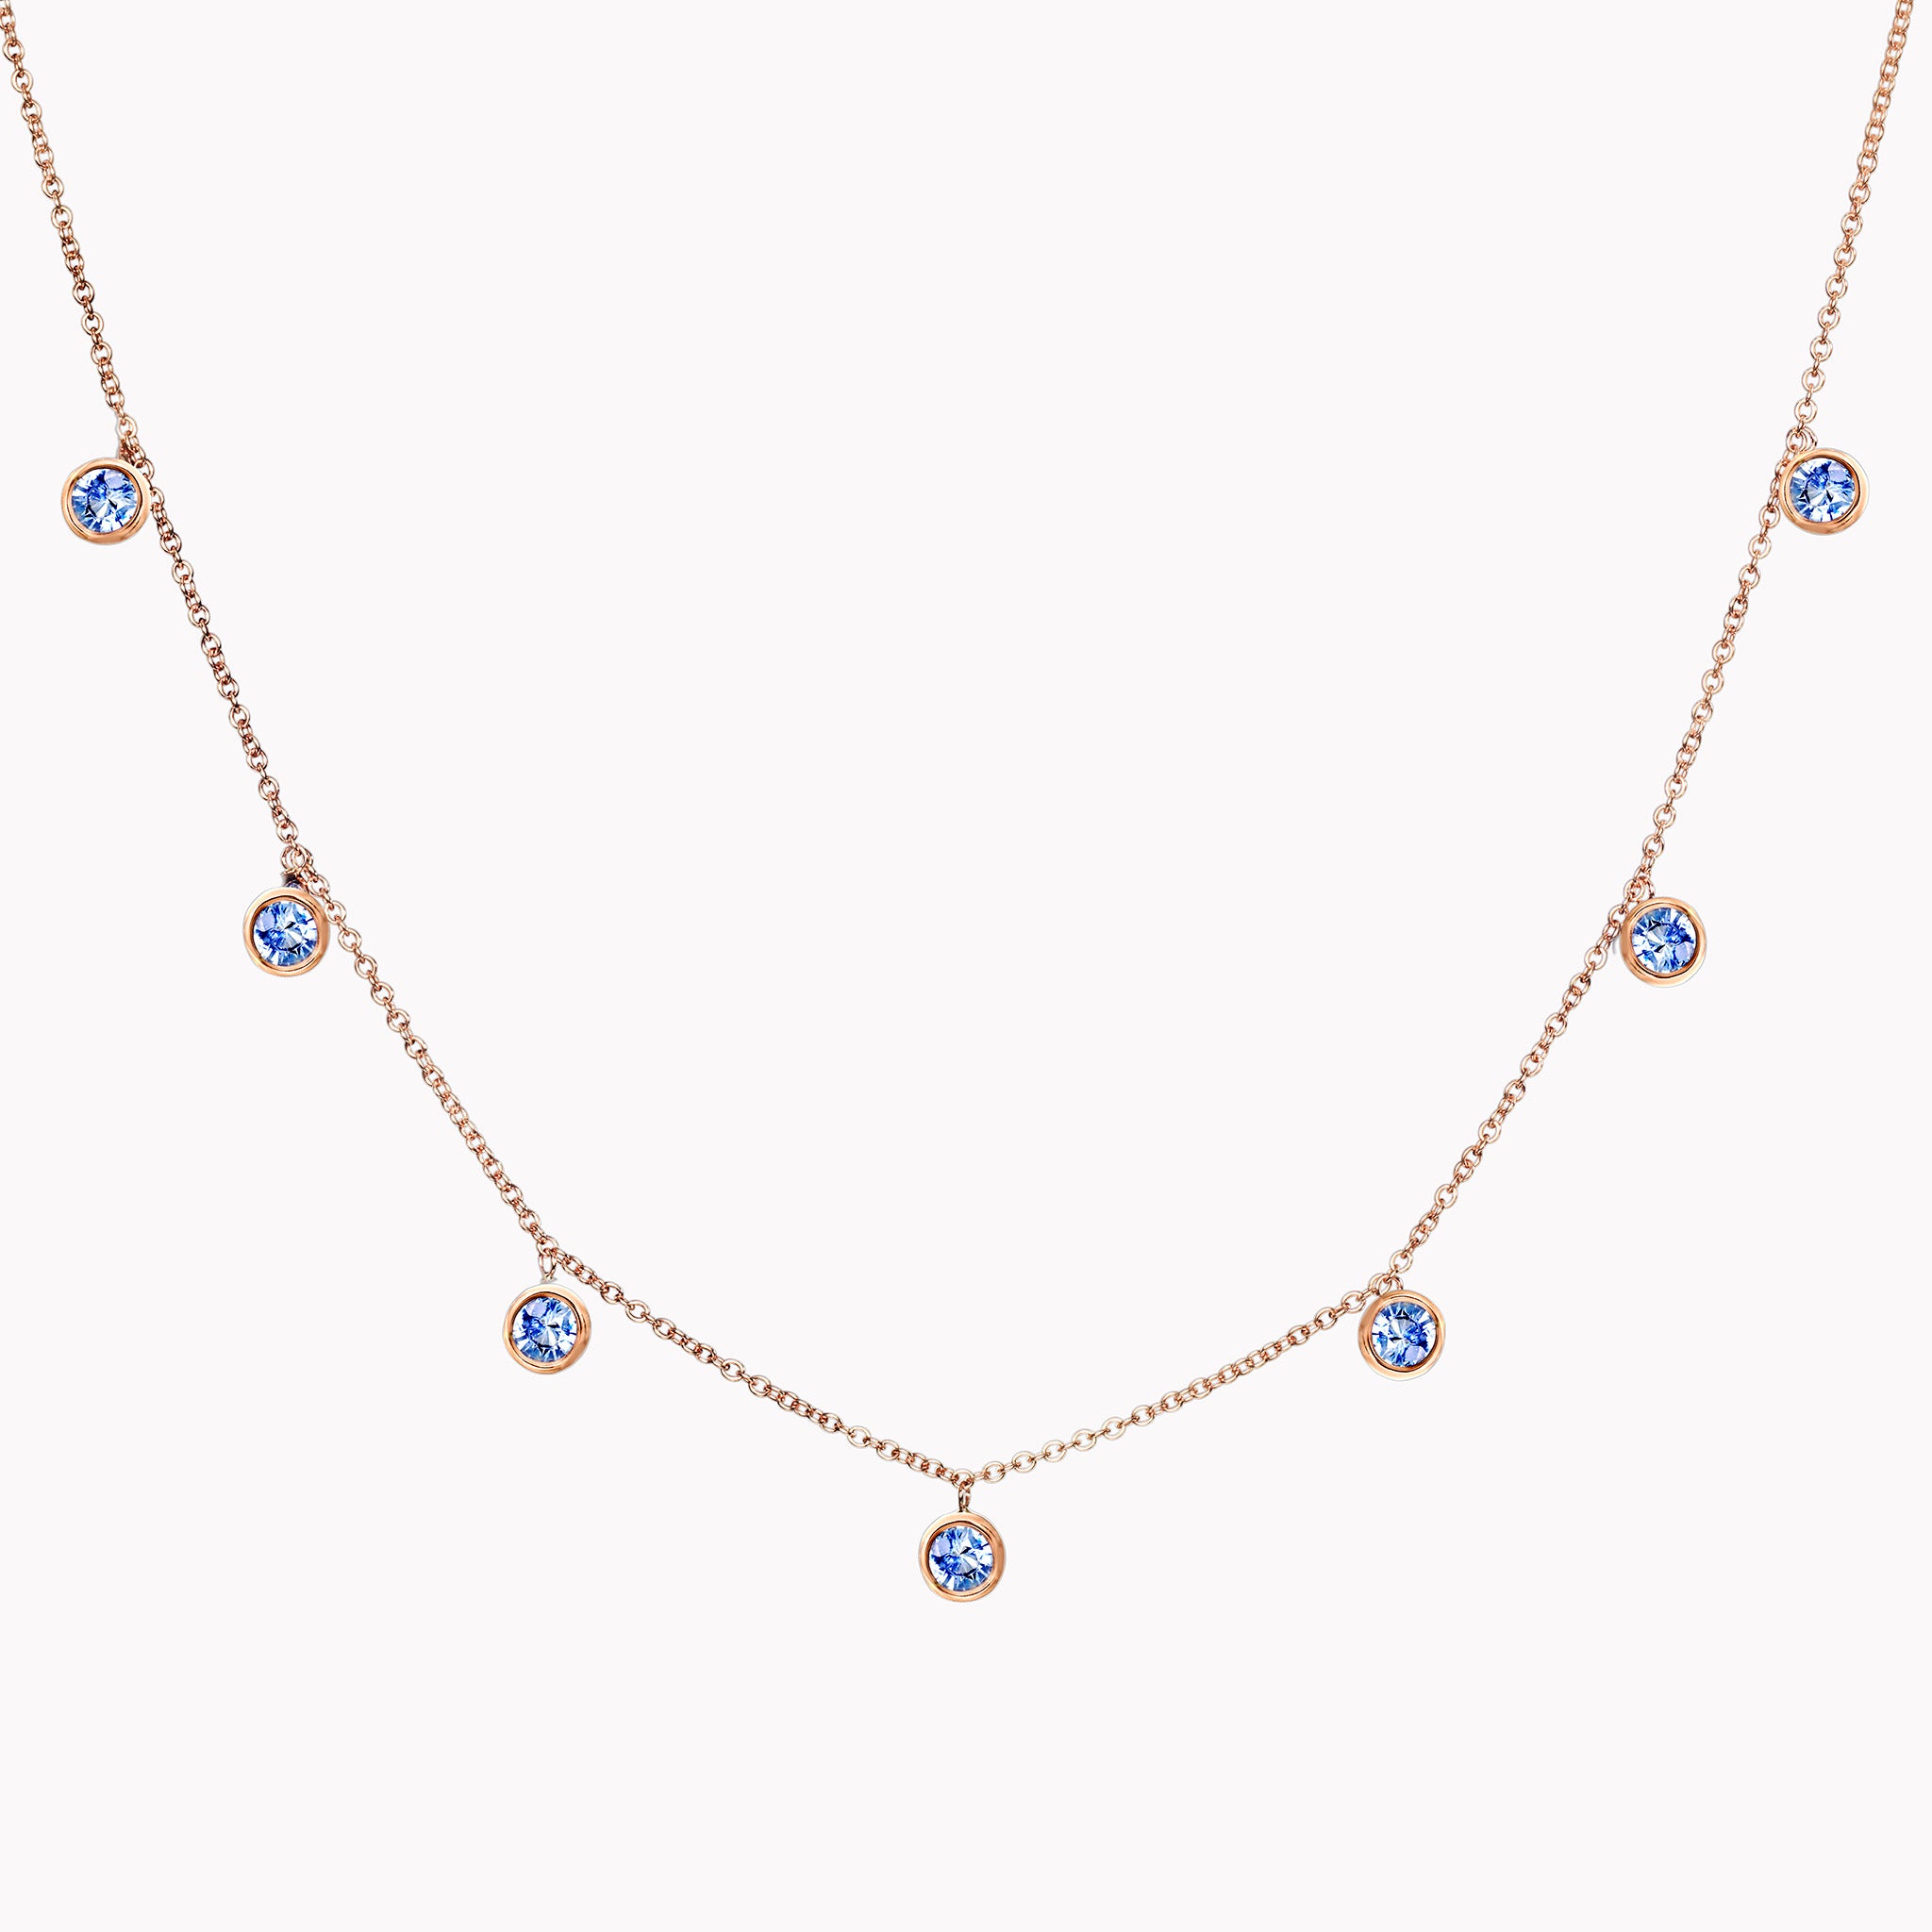 The Mia Cornflower Blue Sapphire Necklace